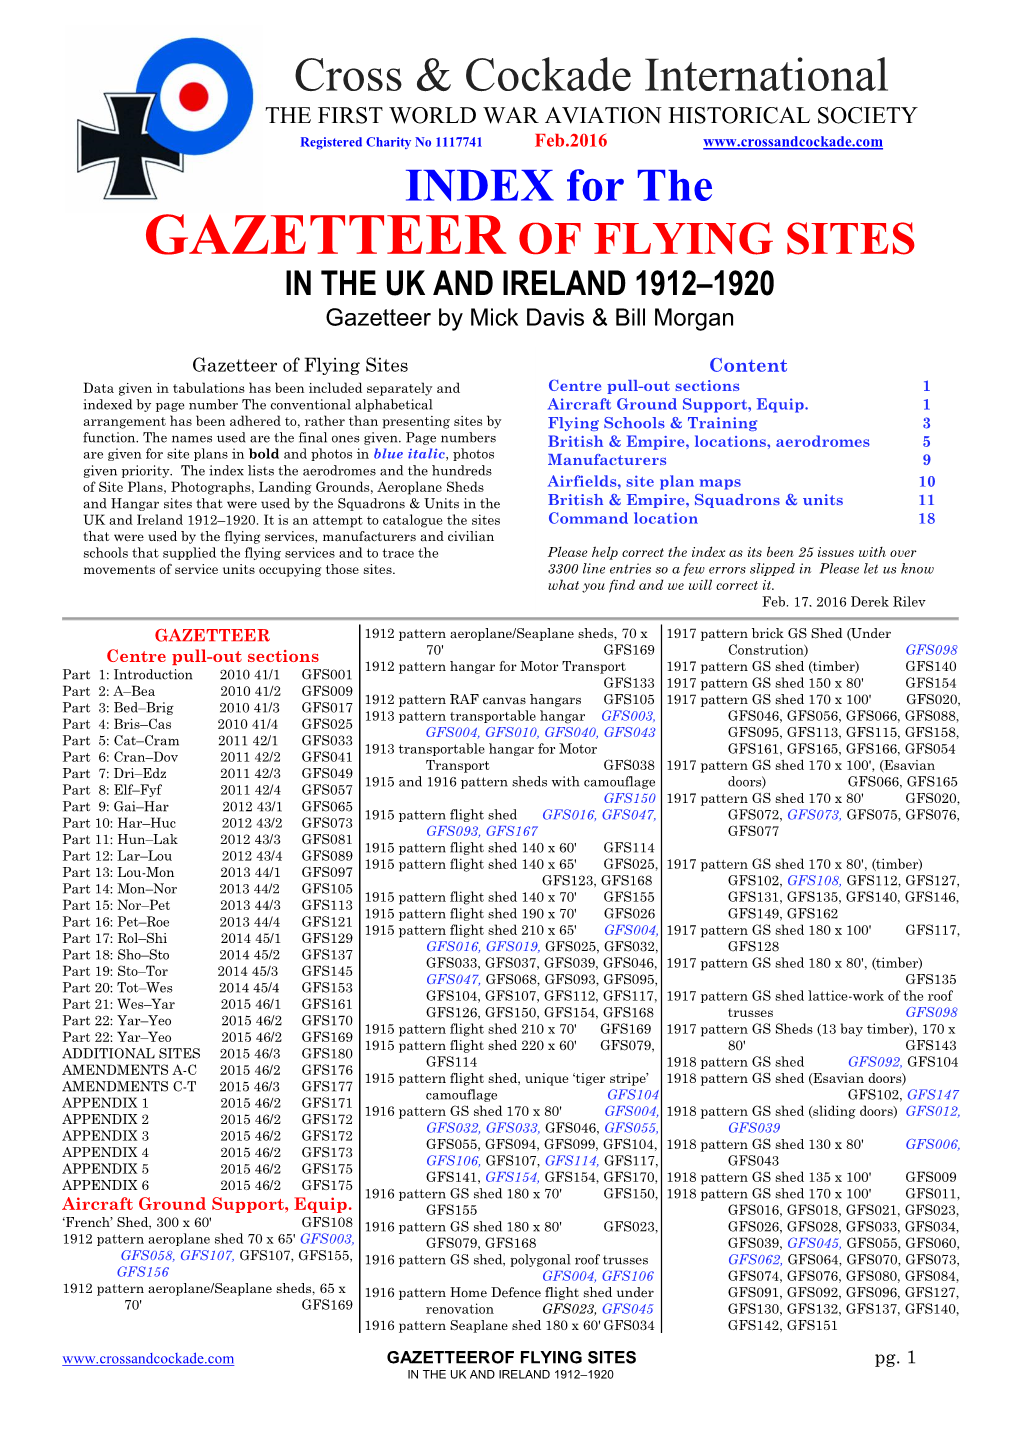 Gazetteer of Flying Sites Index